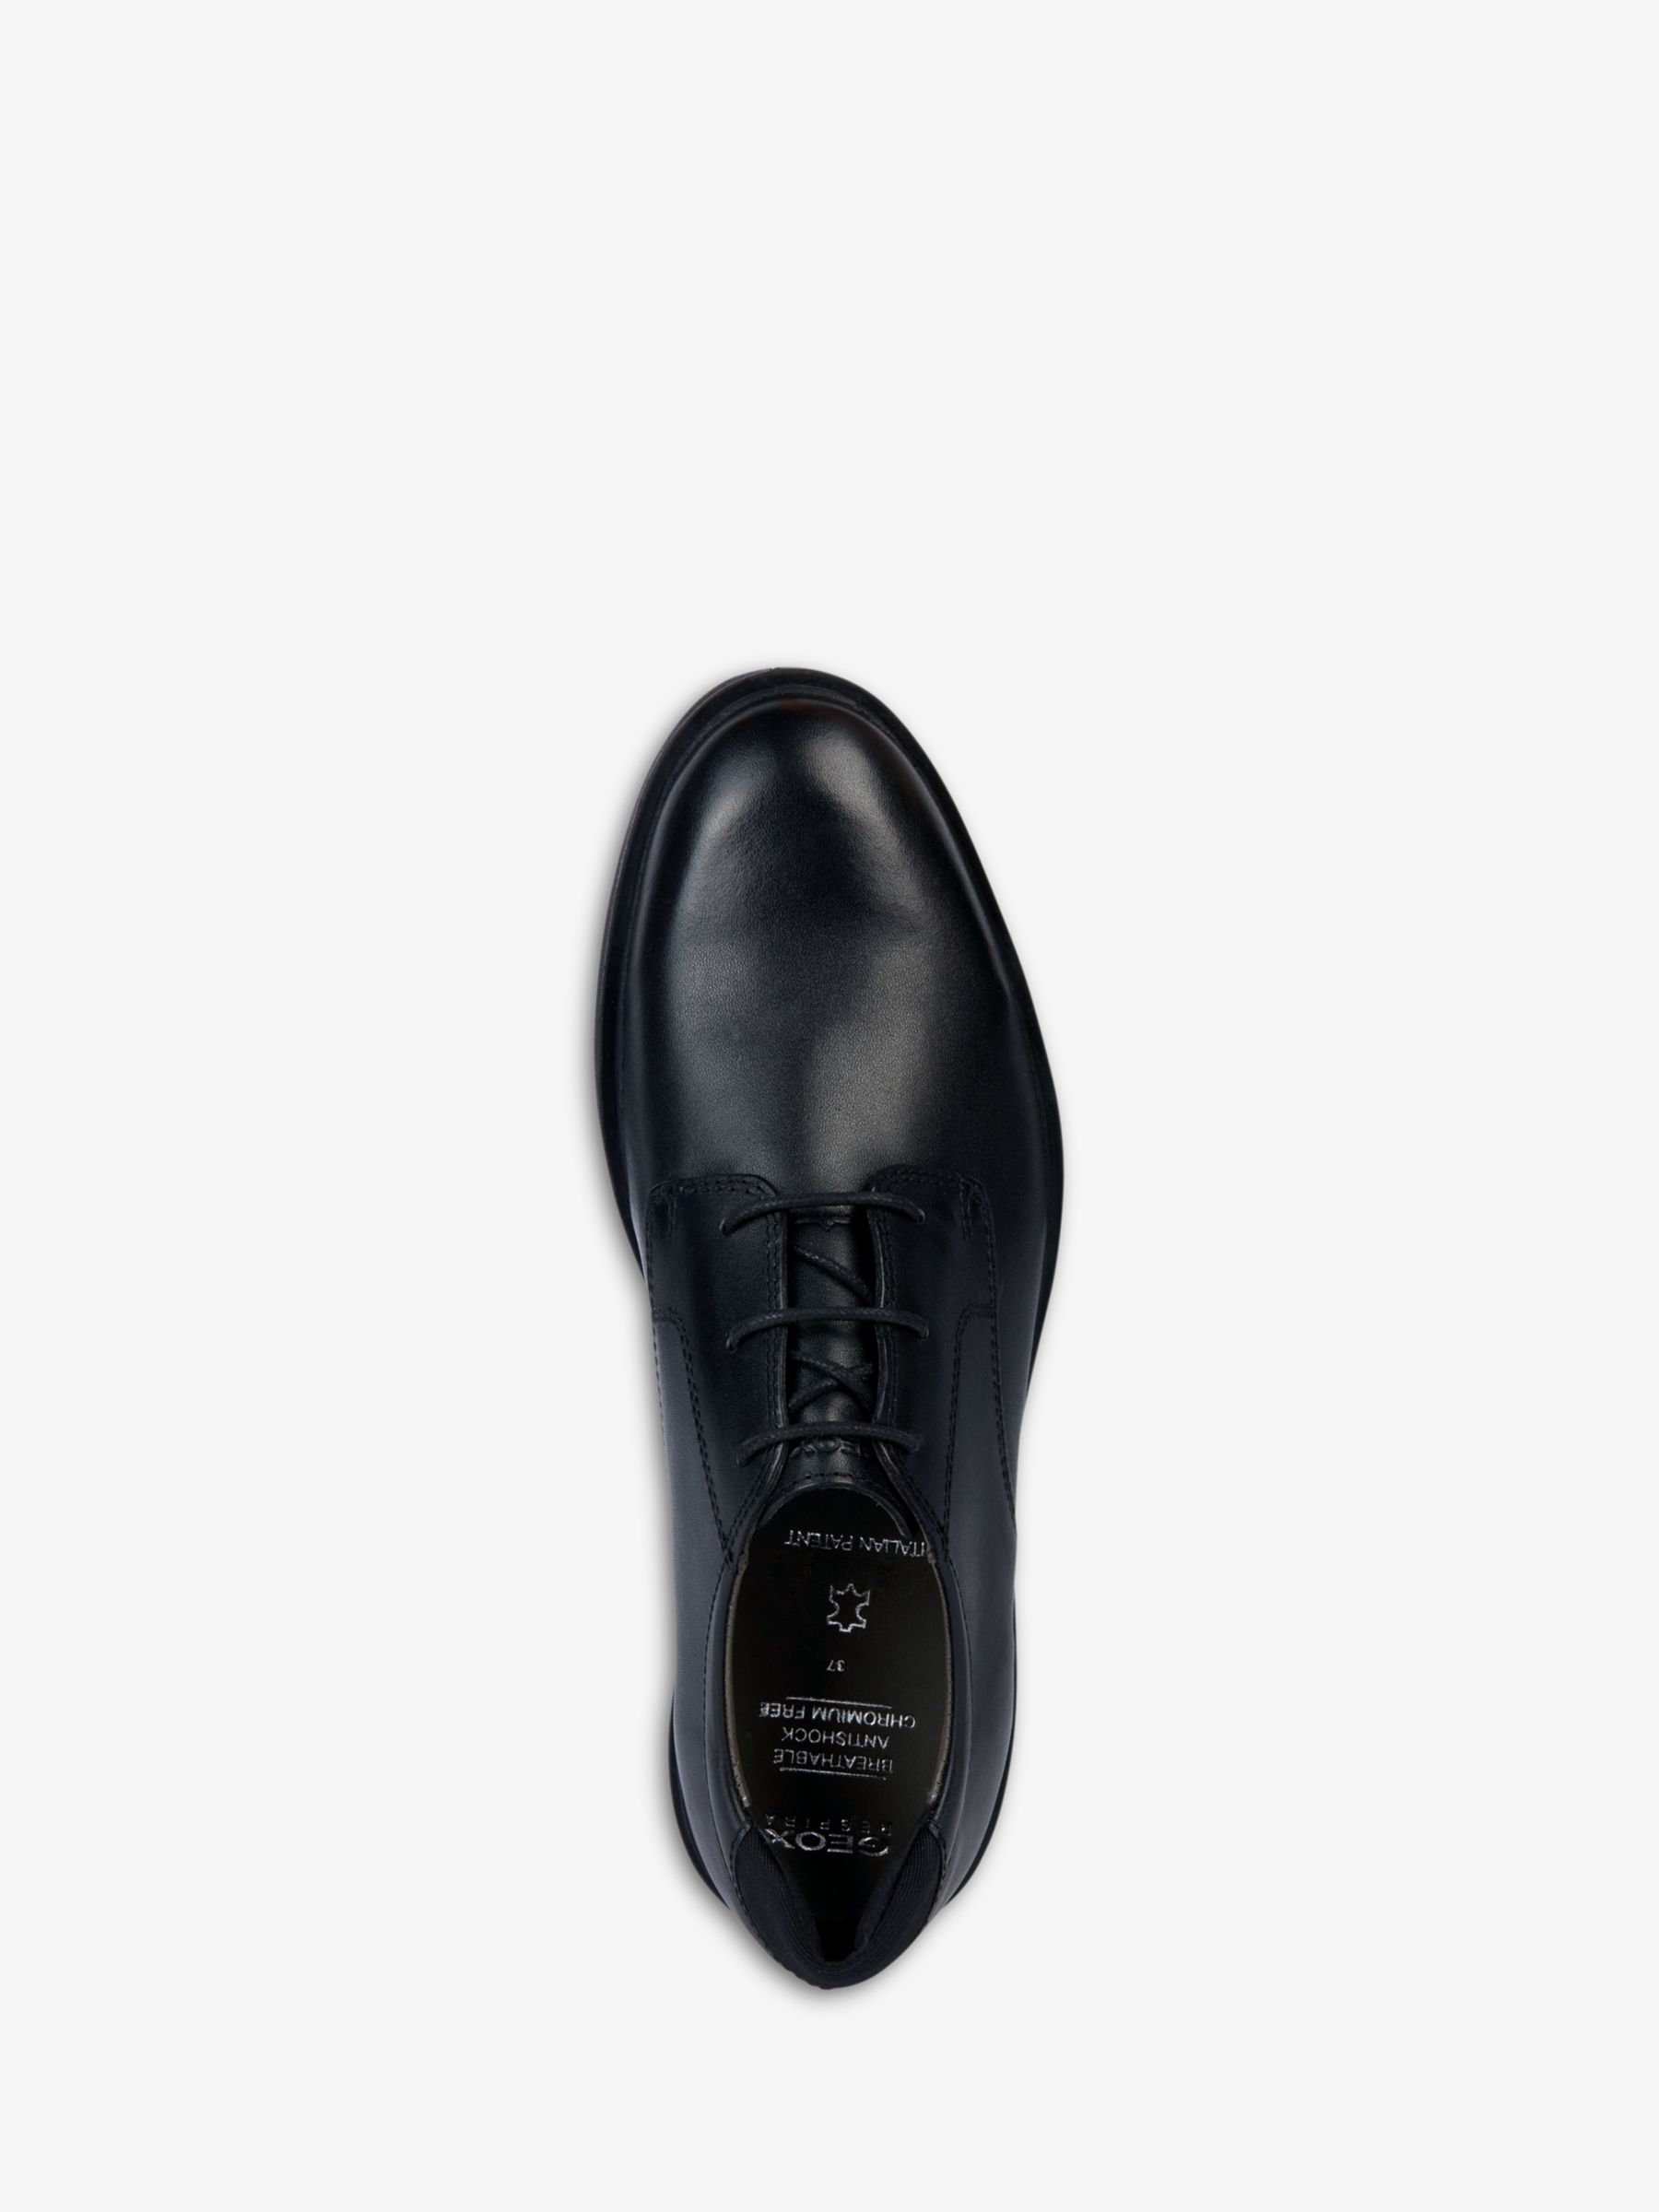 Geox Kids' Zheeno Oxford School Shoes, Black, 36